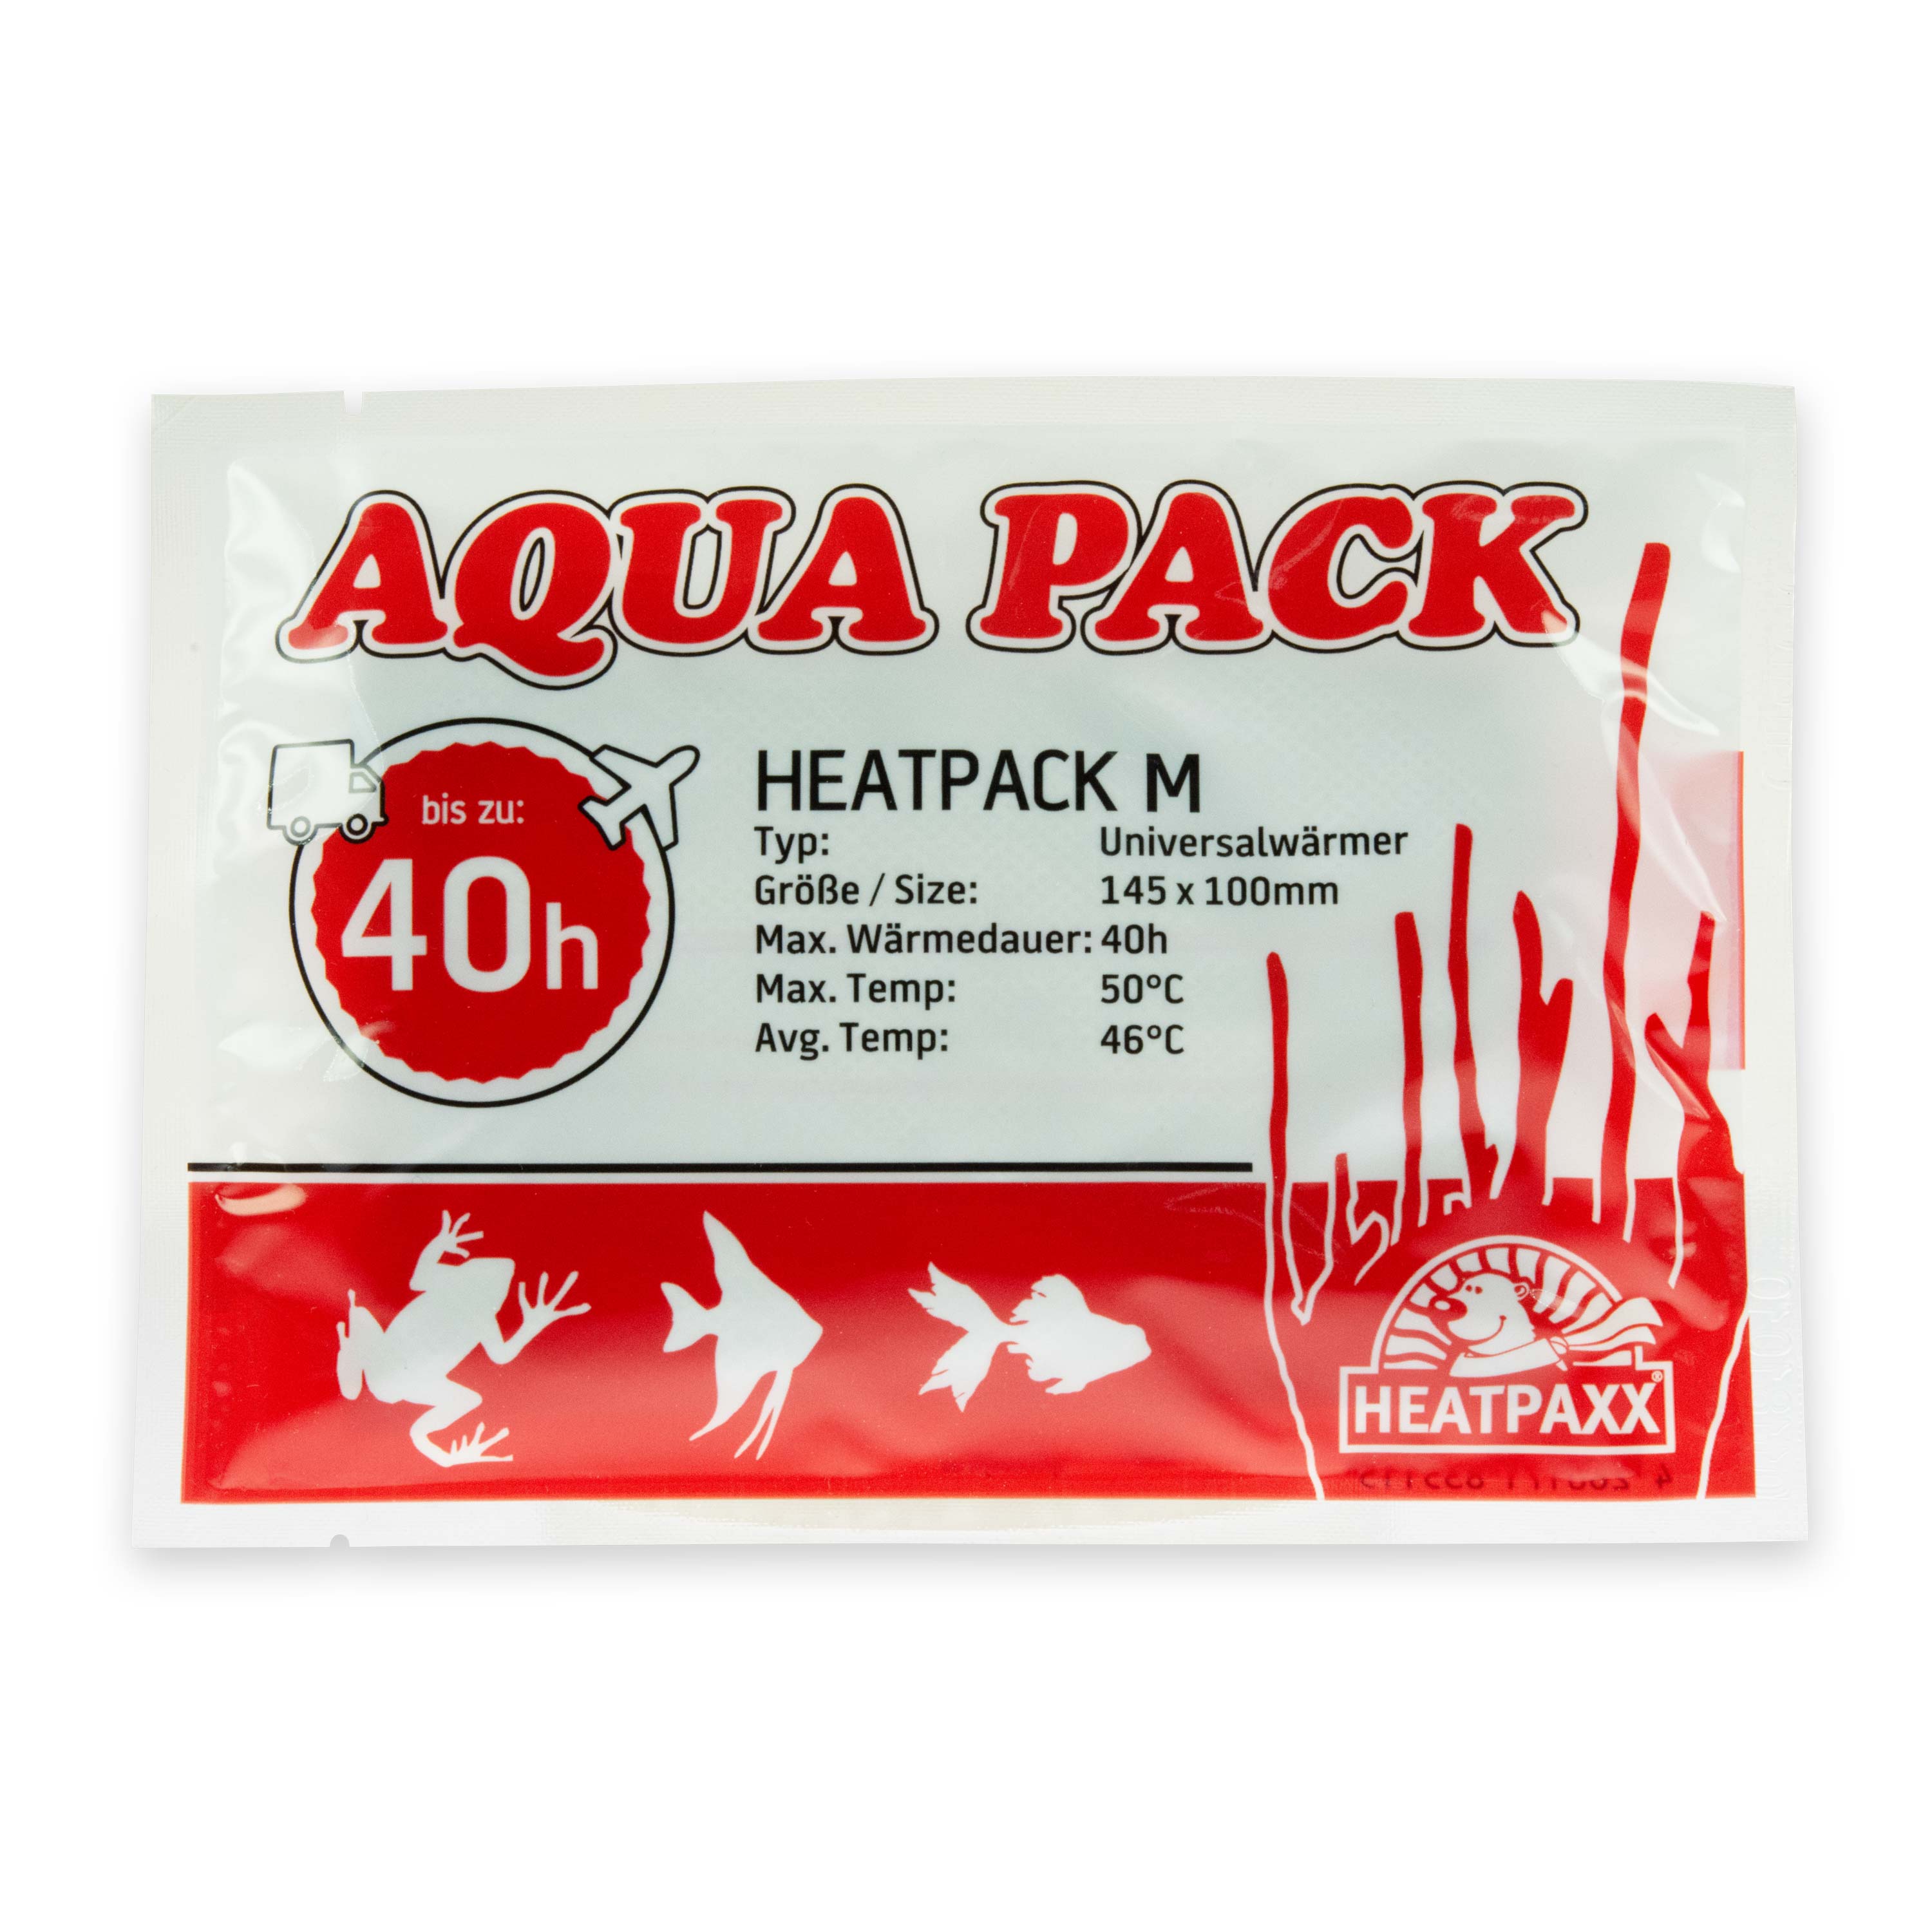 40 hours Heatpack M